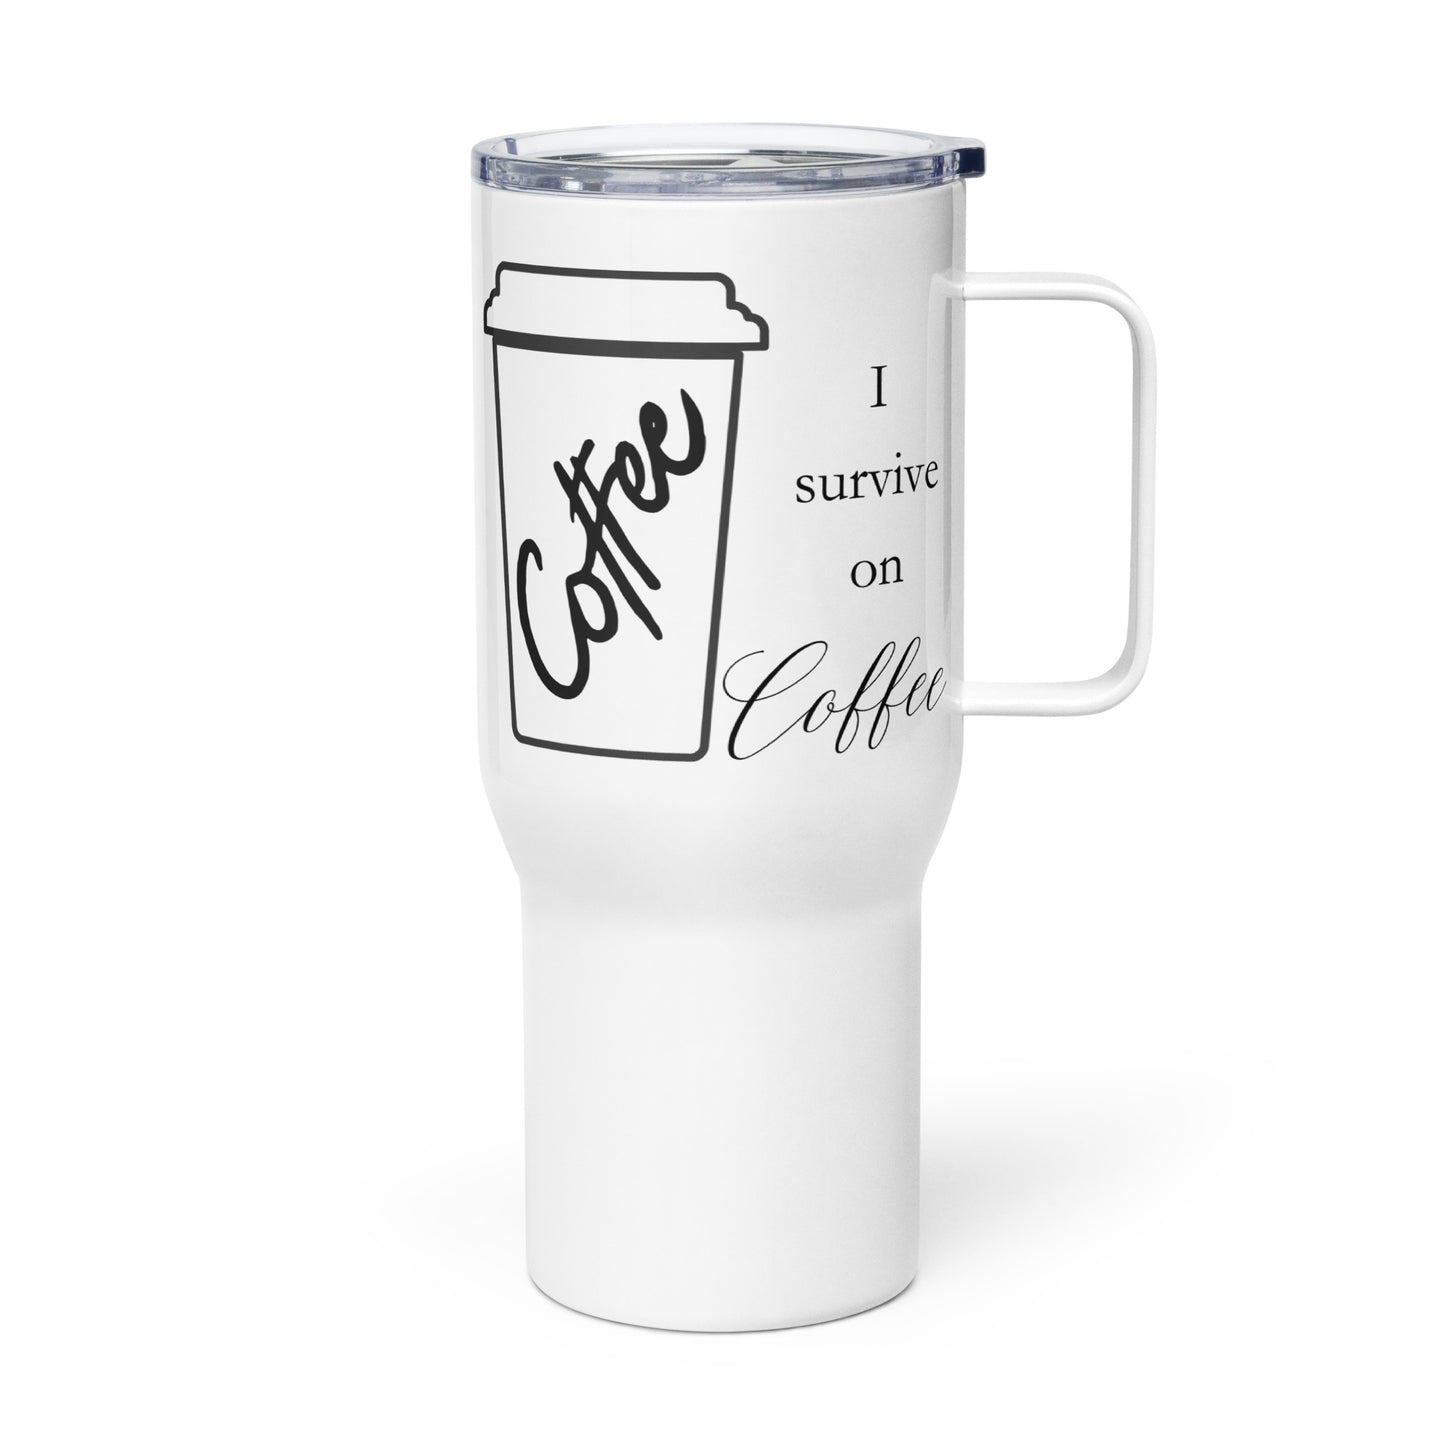 I Survive on Coffee Bold Travel mug with a handle